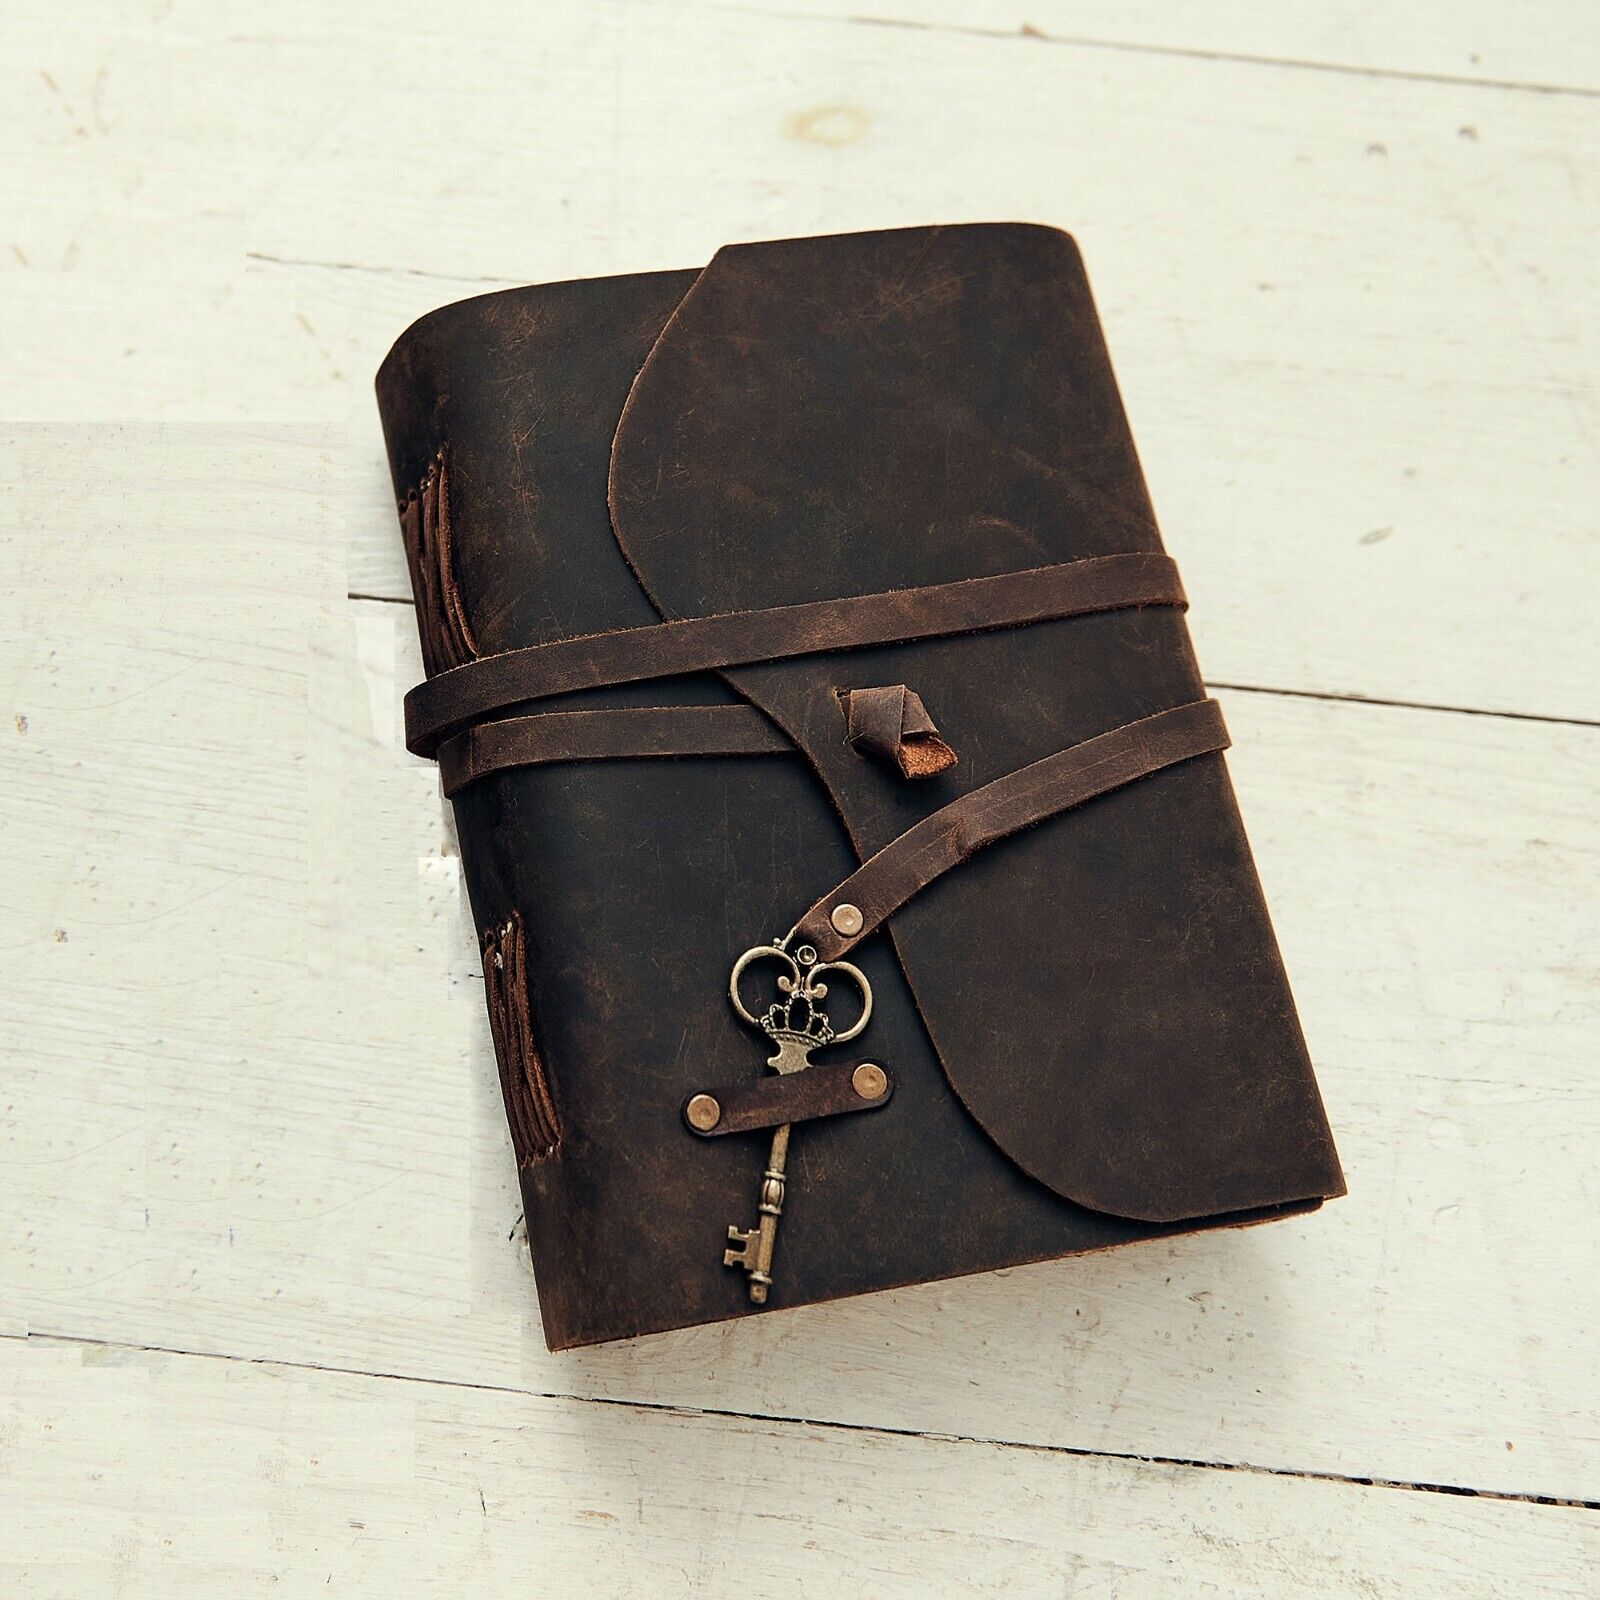 Vintage Genuine Leather Journal Deckle Edge Paper Handmade Leather bound Journal